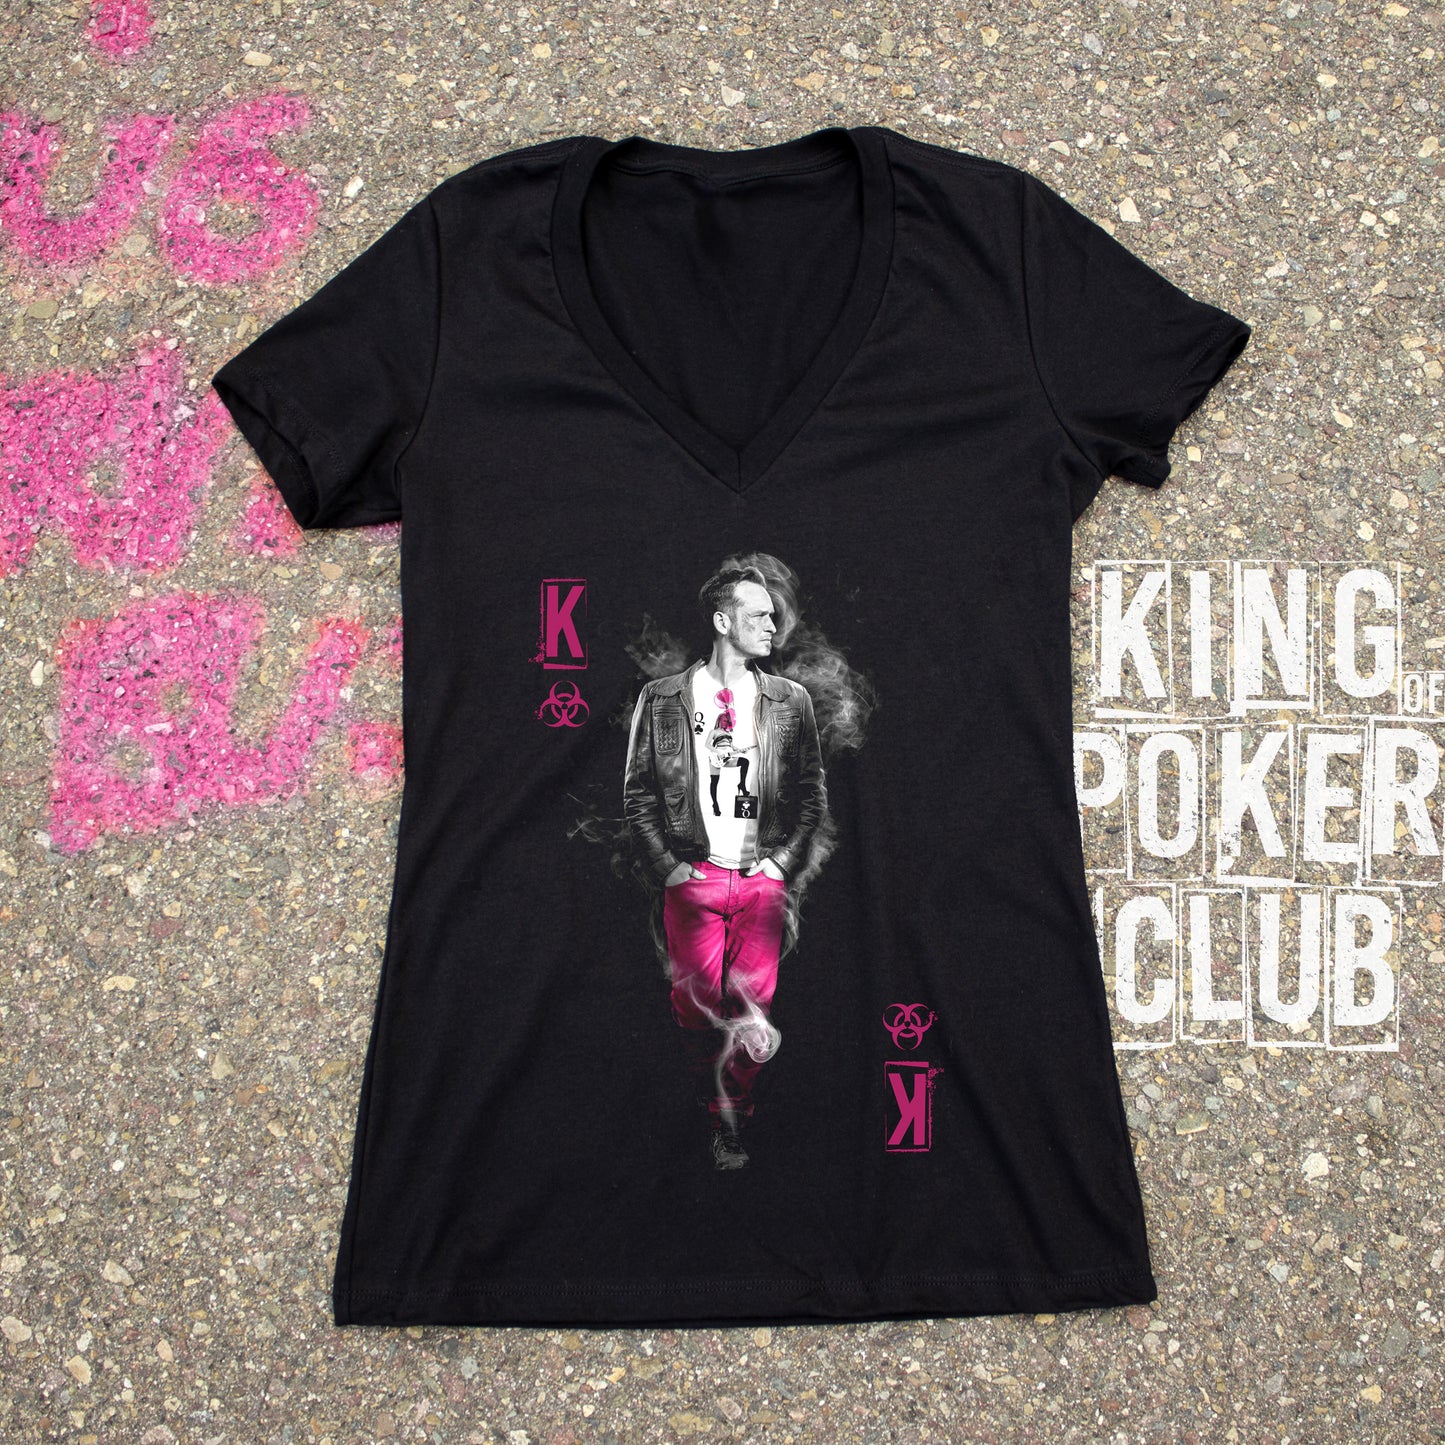 King Of Poker Club Deep V-Neck T-Shirt